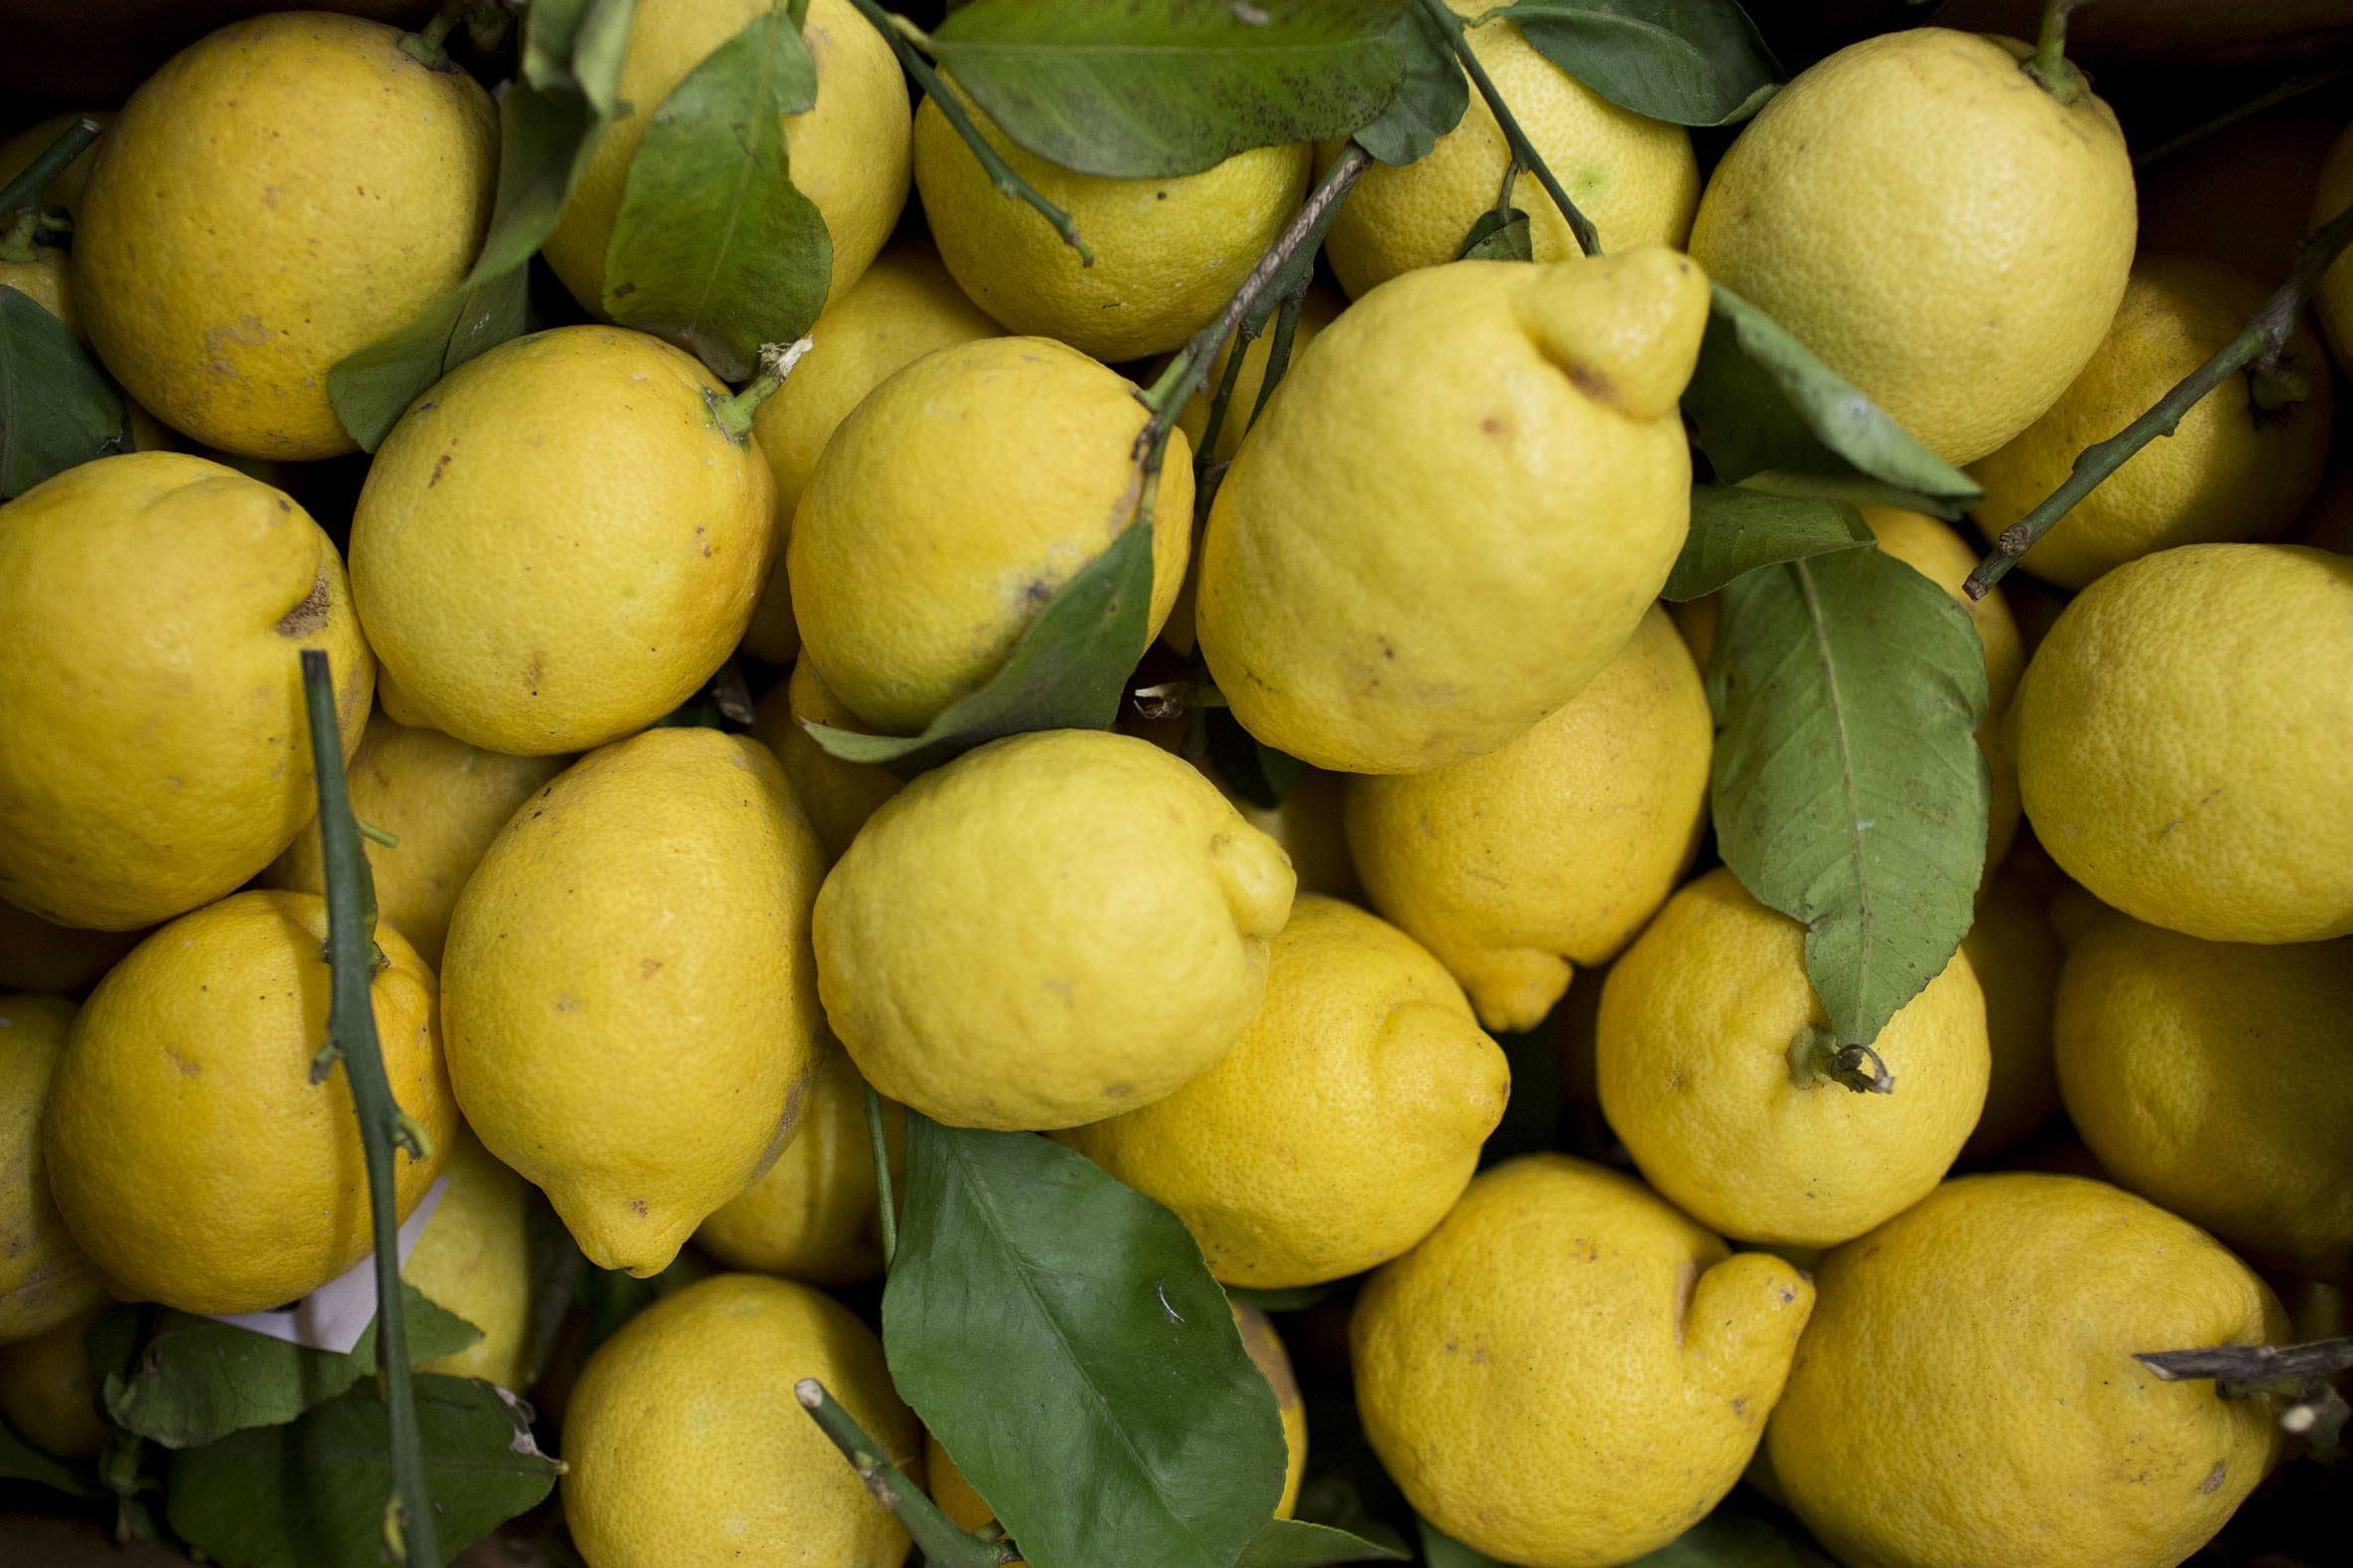 fruit-and-vegetable-market-report-march-2014-unwaxed-lemons.jpg?mtime=20170922112651#asset:11334